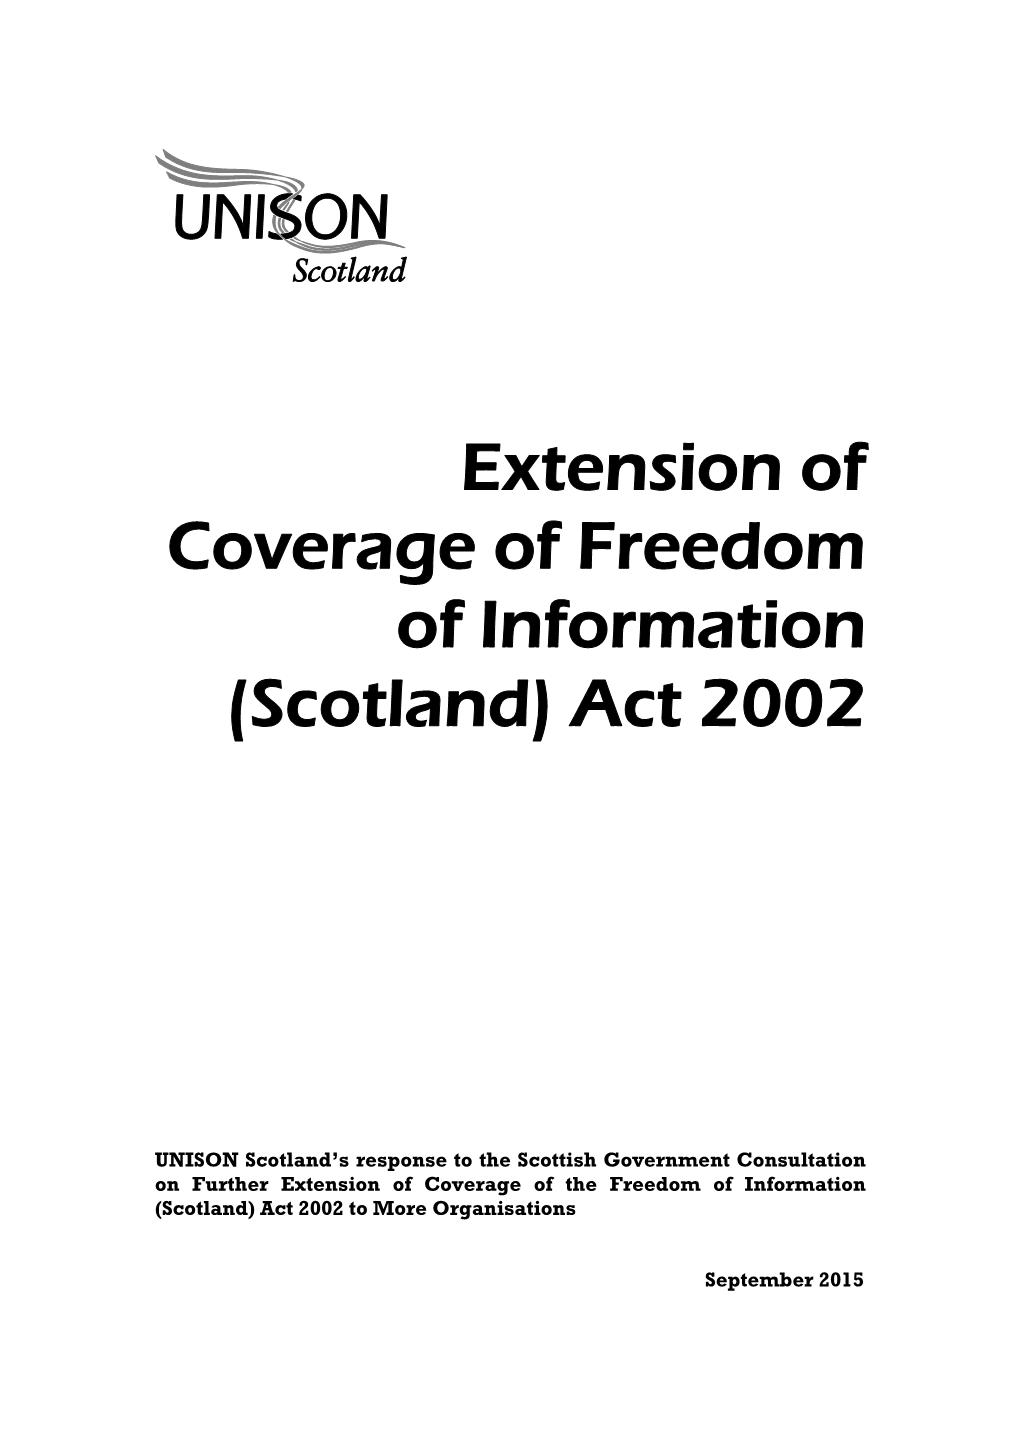 (Scotland) Act 2002